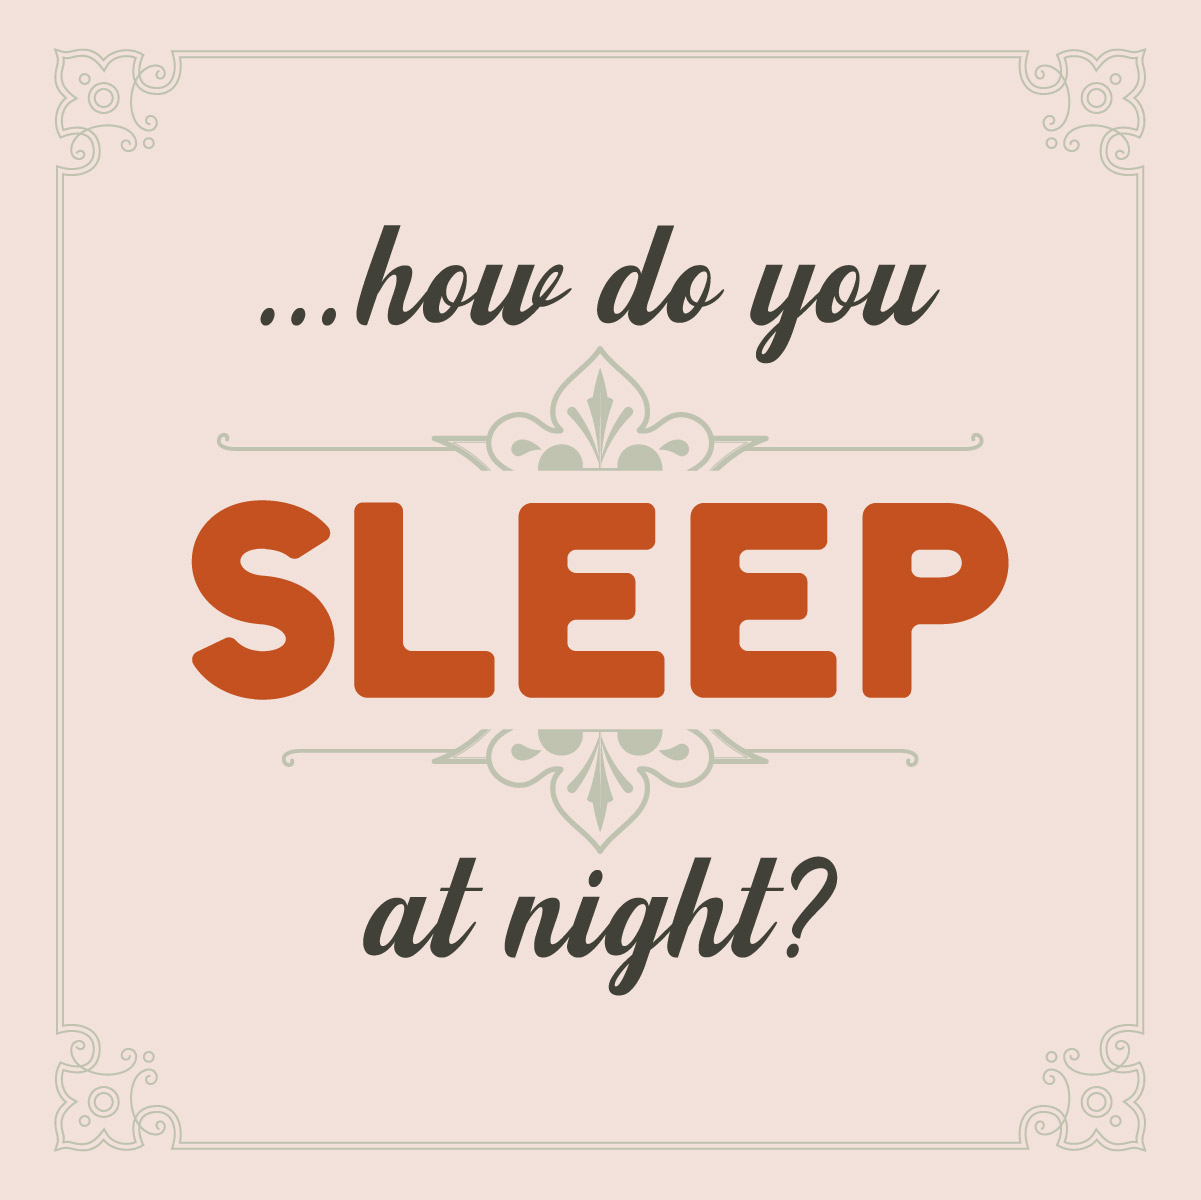 ...how do you sleep at night?